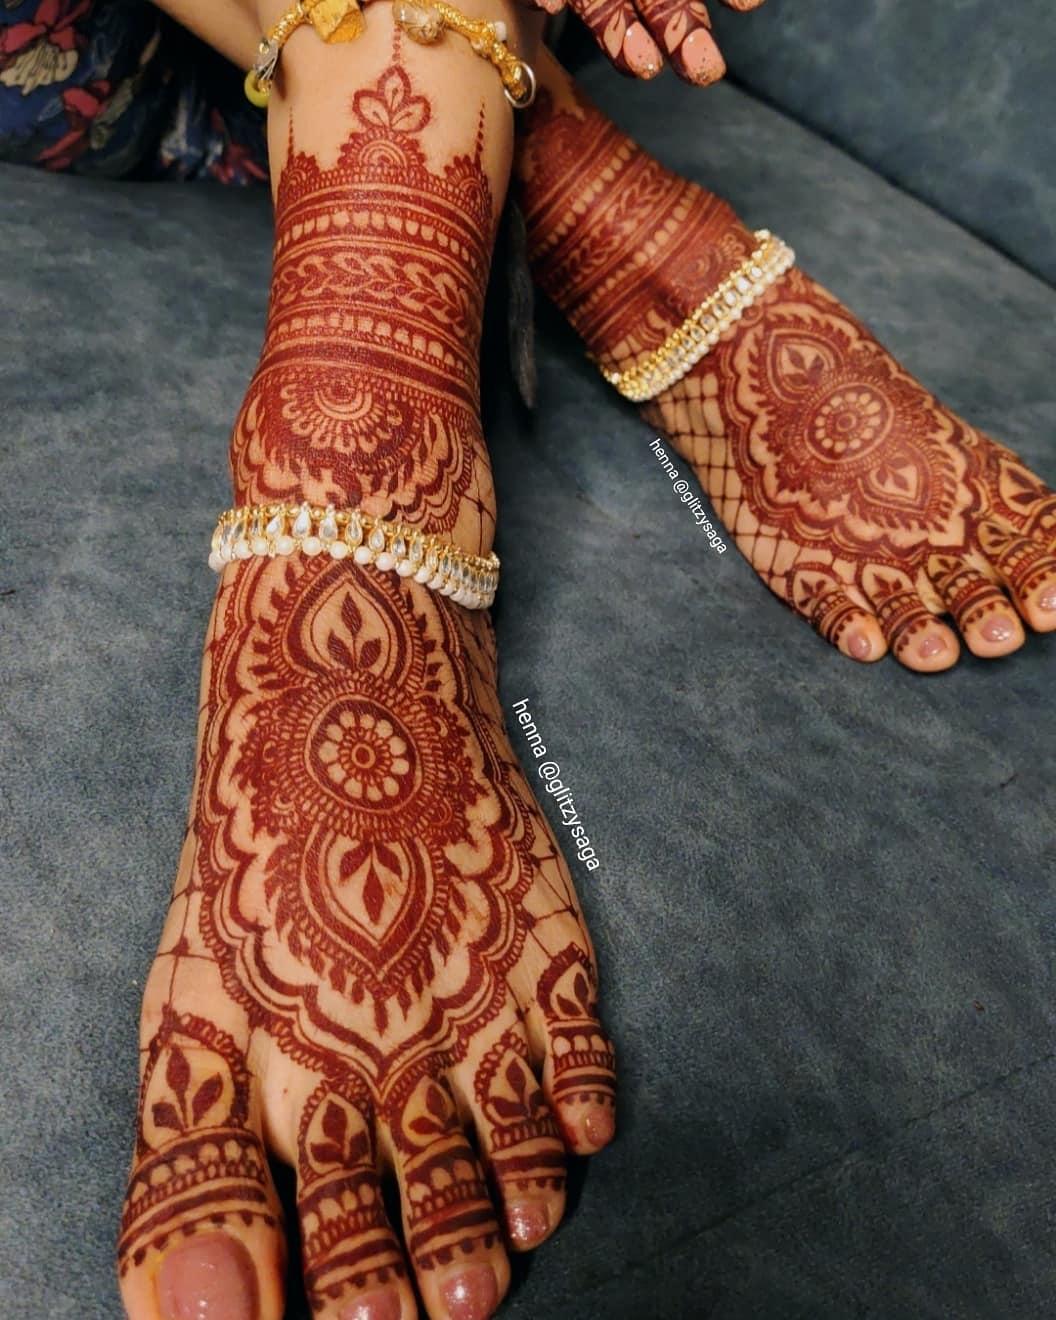 50+ Latest & Stylish Legs Mehndi Designs for Wedding | MakeupWale